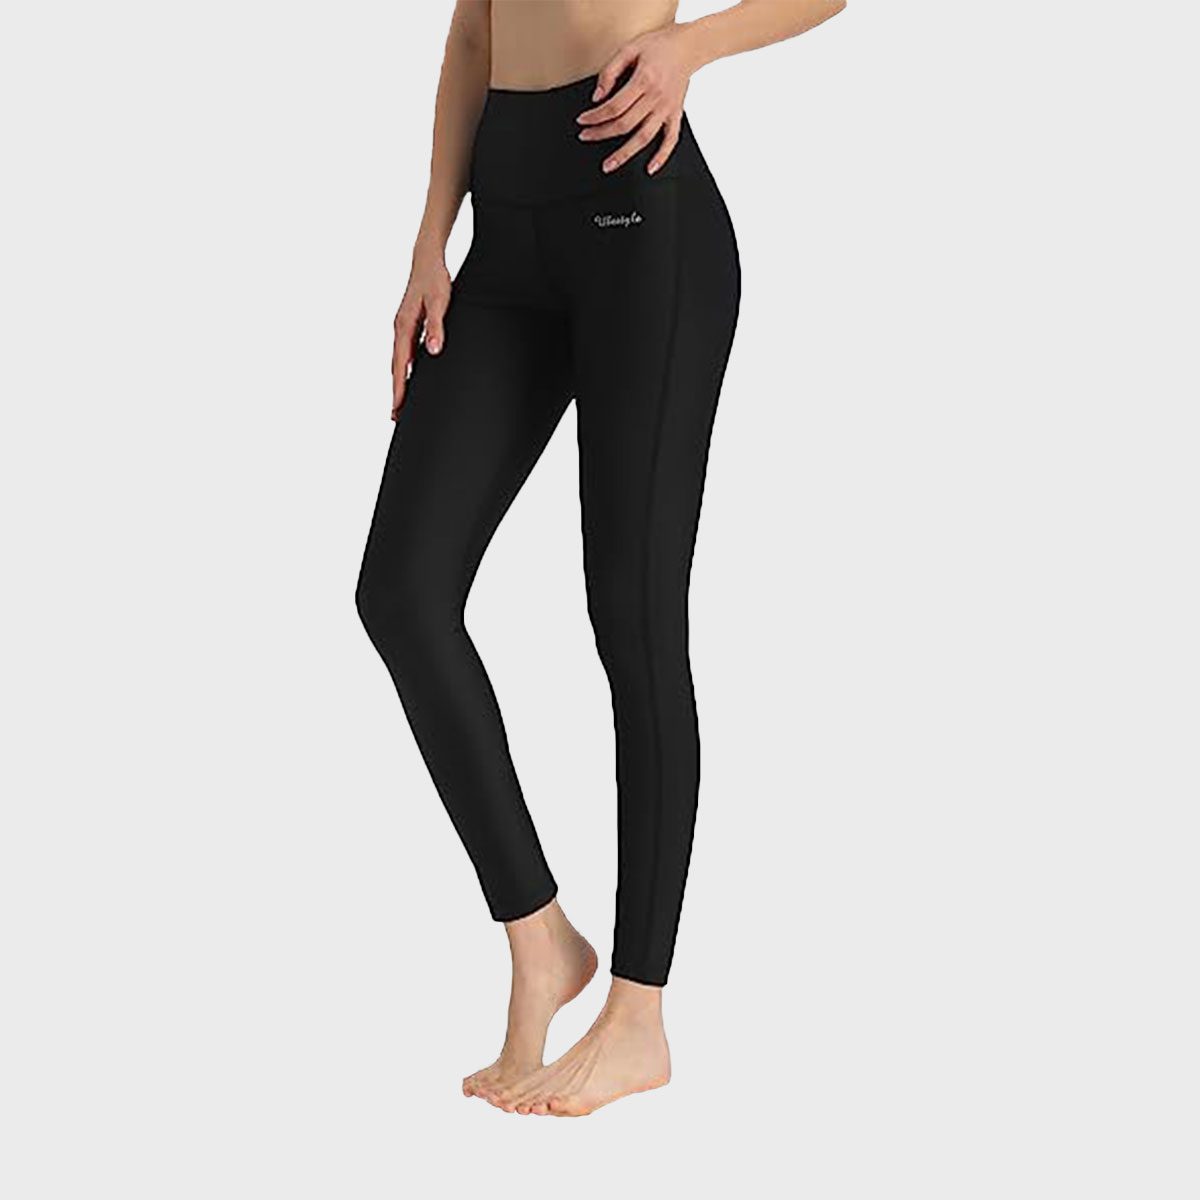 High Waisted Yoga Pants or Leggings Gray and Black Design/with Inside  Pocket Long Yoga Leggings/upf 50 Clothing/sun Protection Yoga Pants 